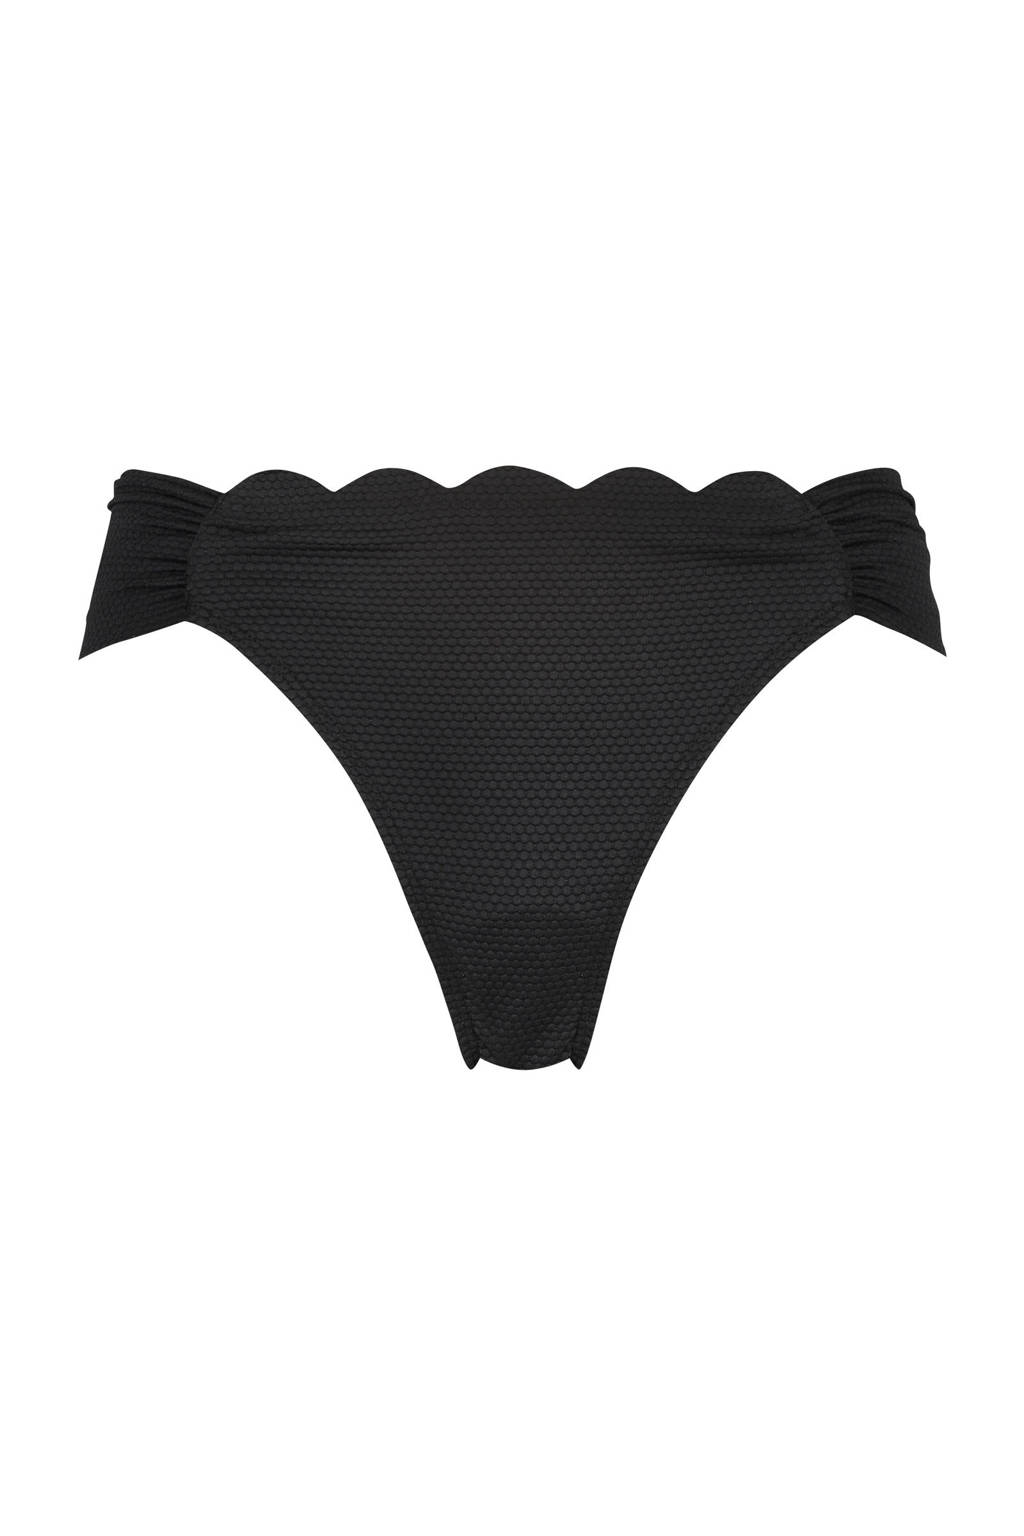 Hunkemöller bikinibroekje Scallop met structuur zwart